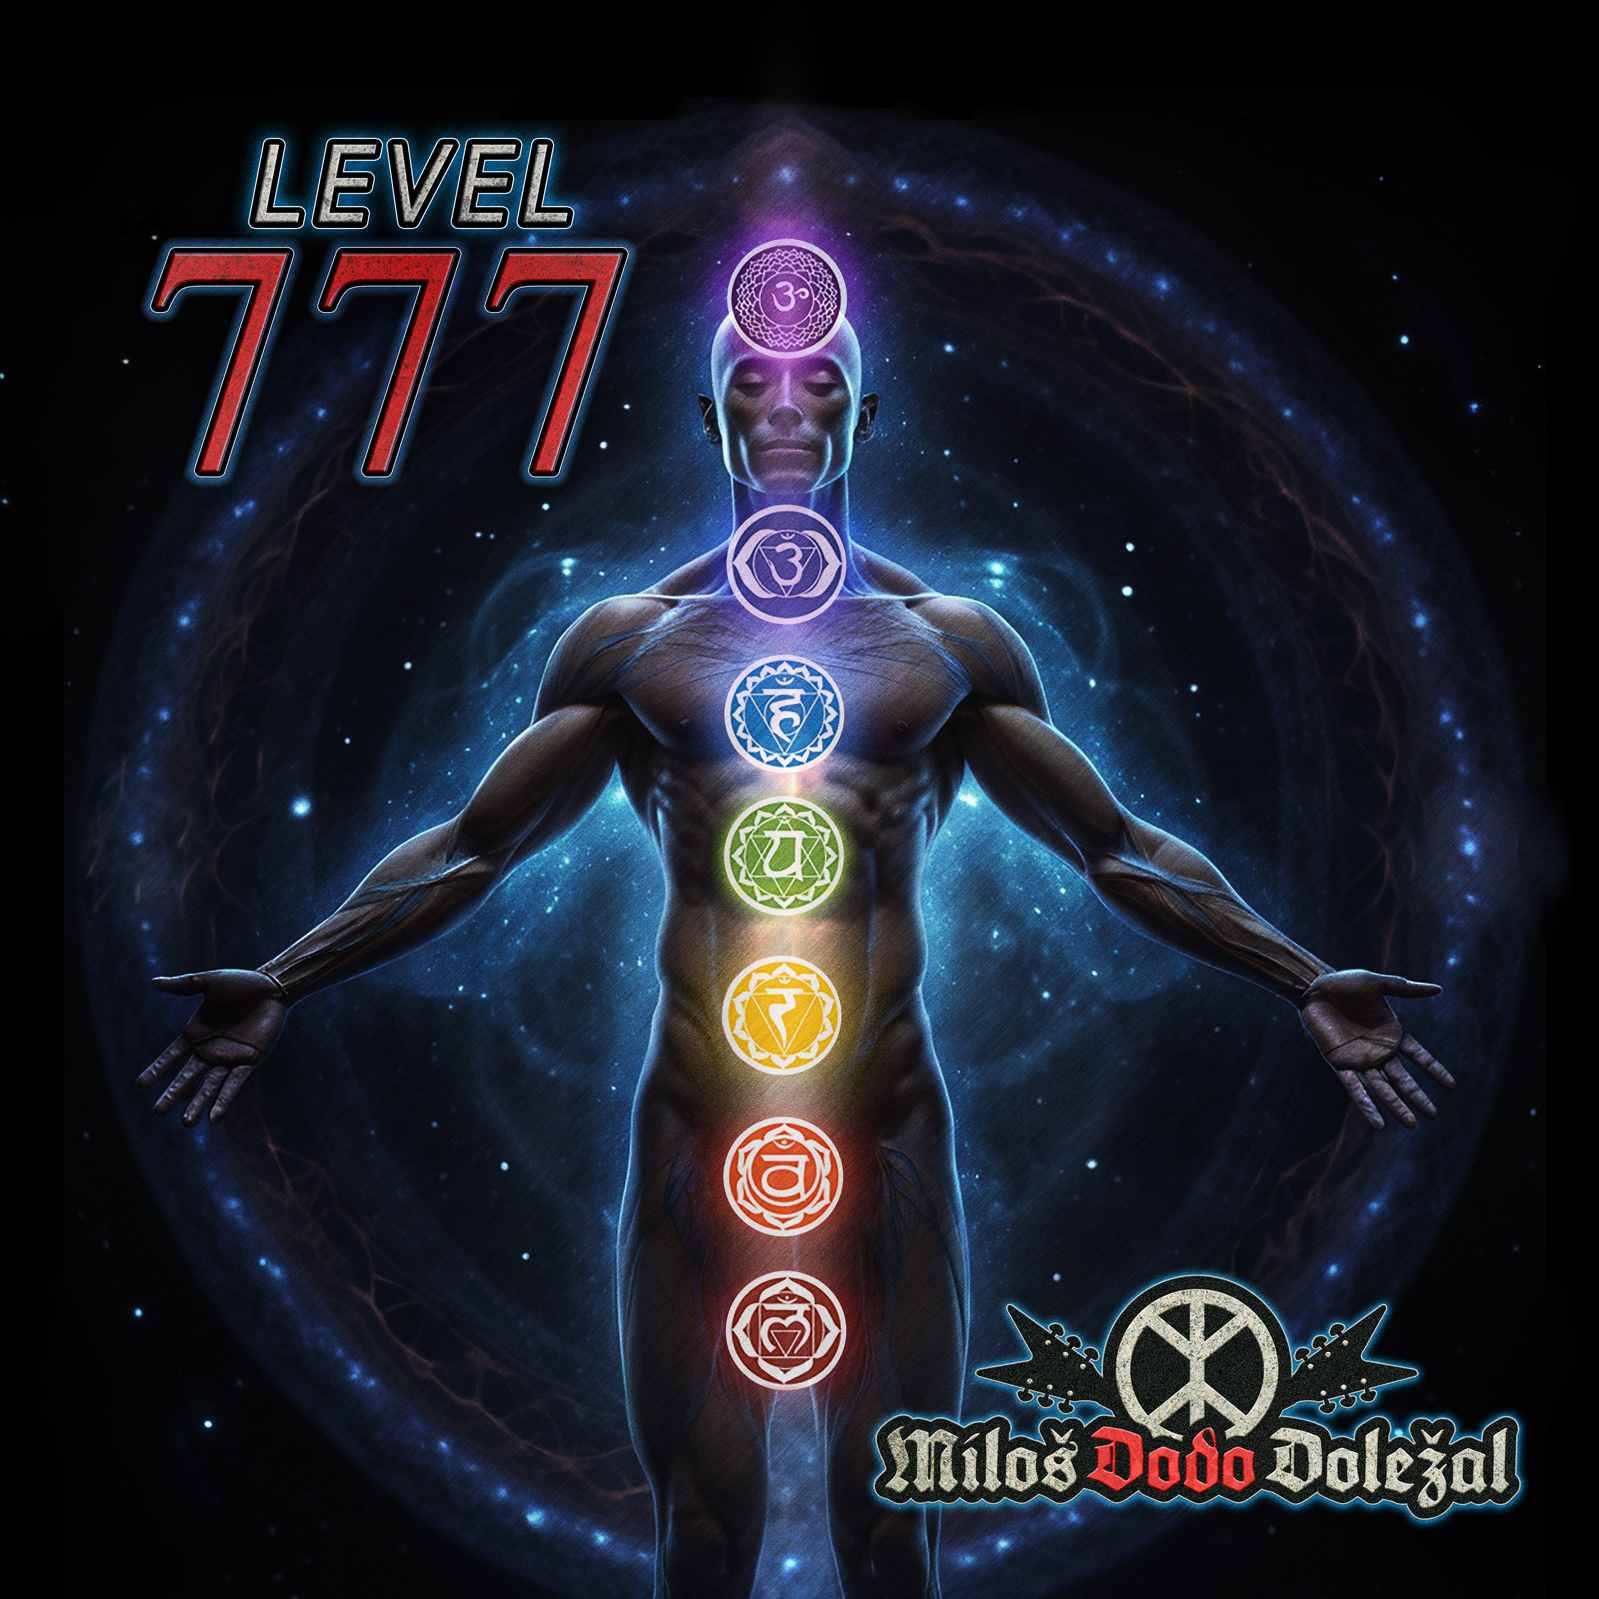 Level 777